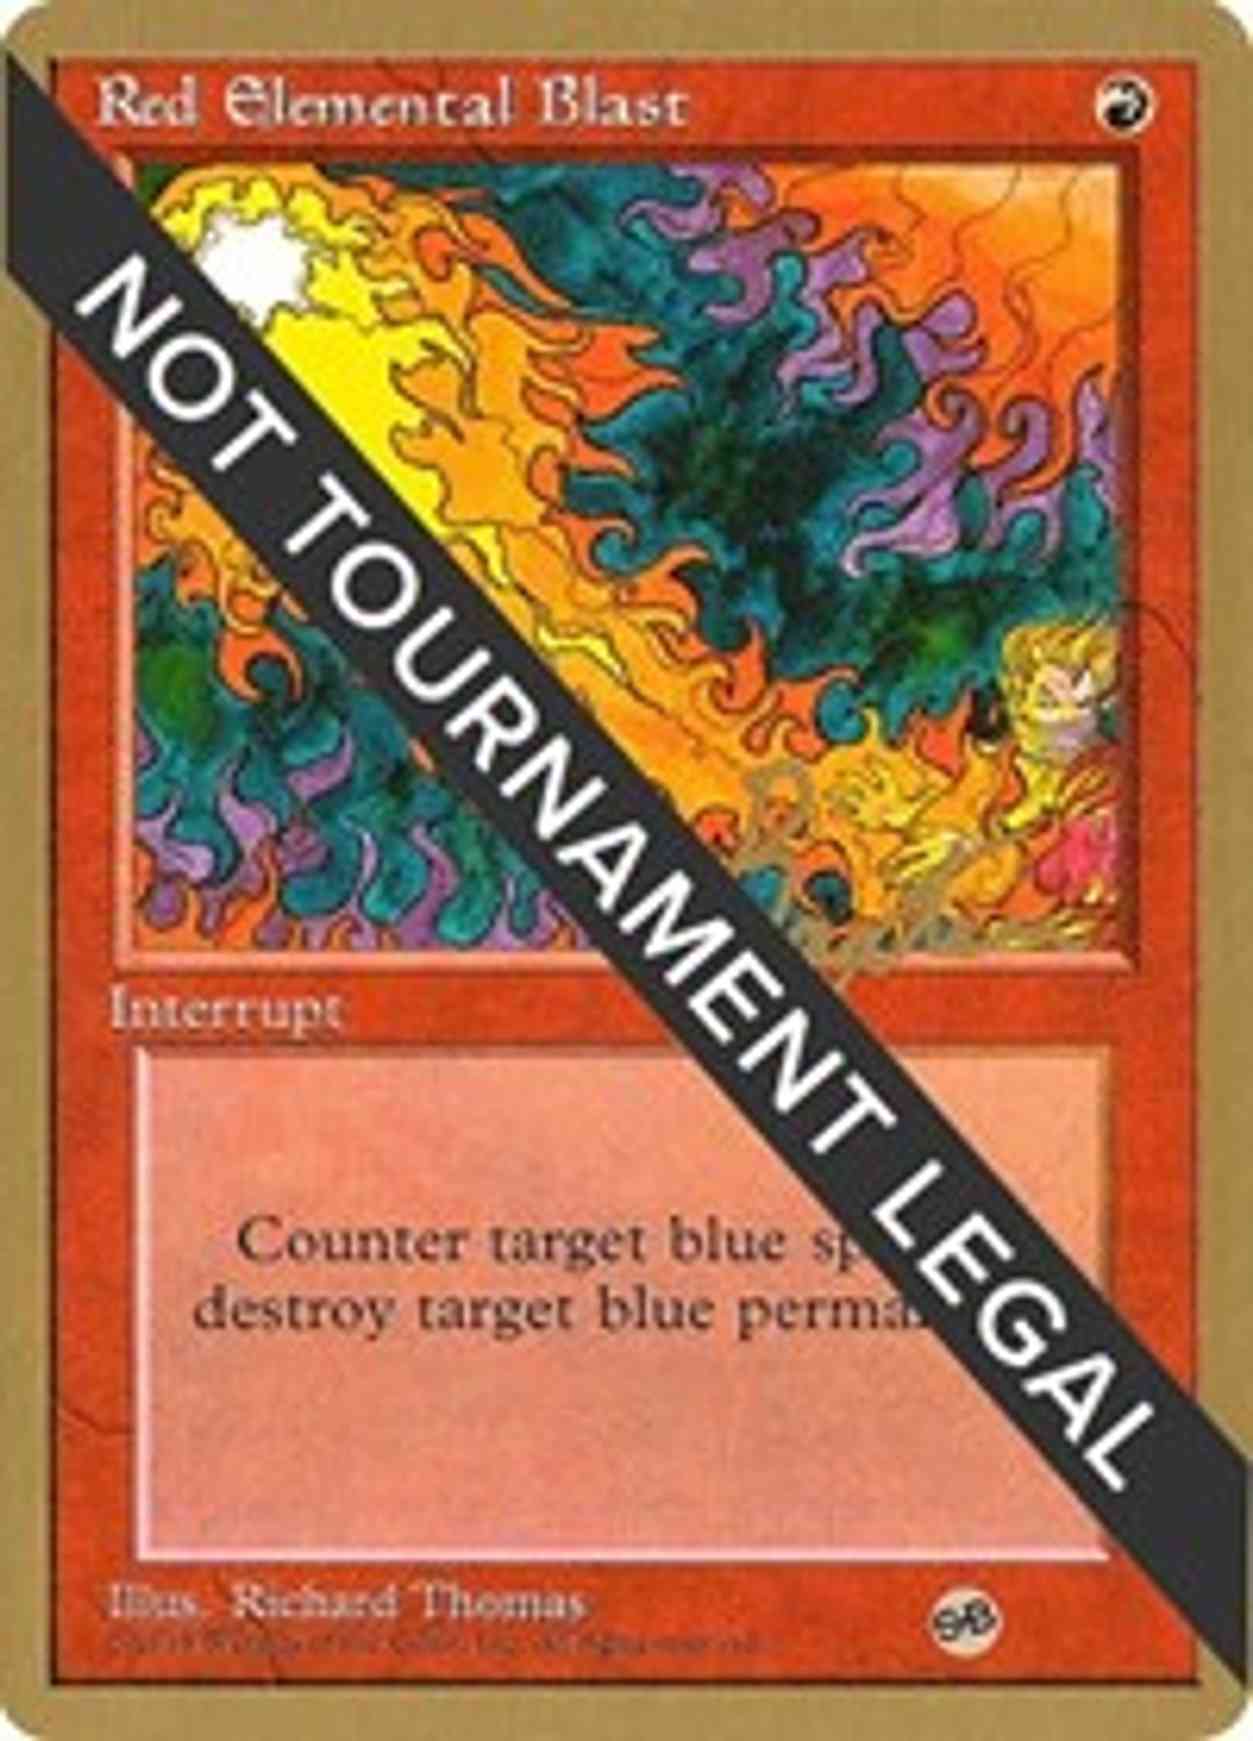 Red Elemental Blast - 1996 George Baxter (4ED) magic card front